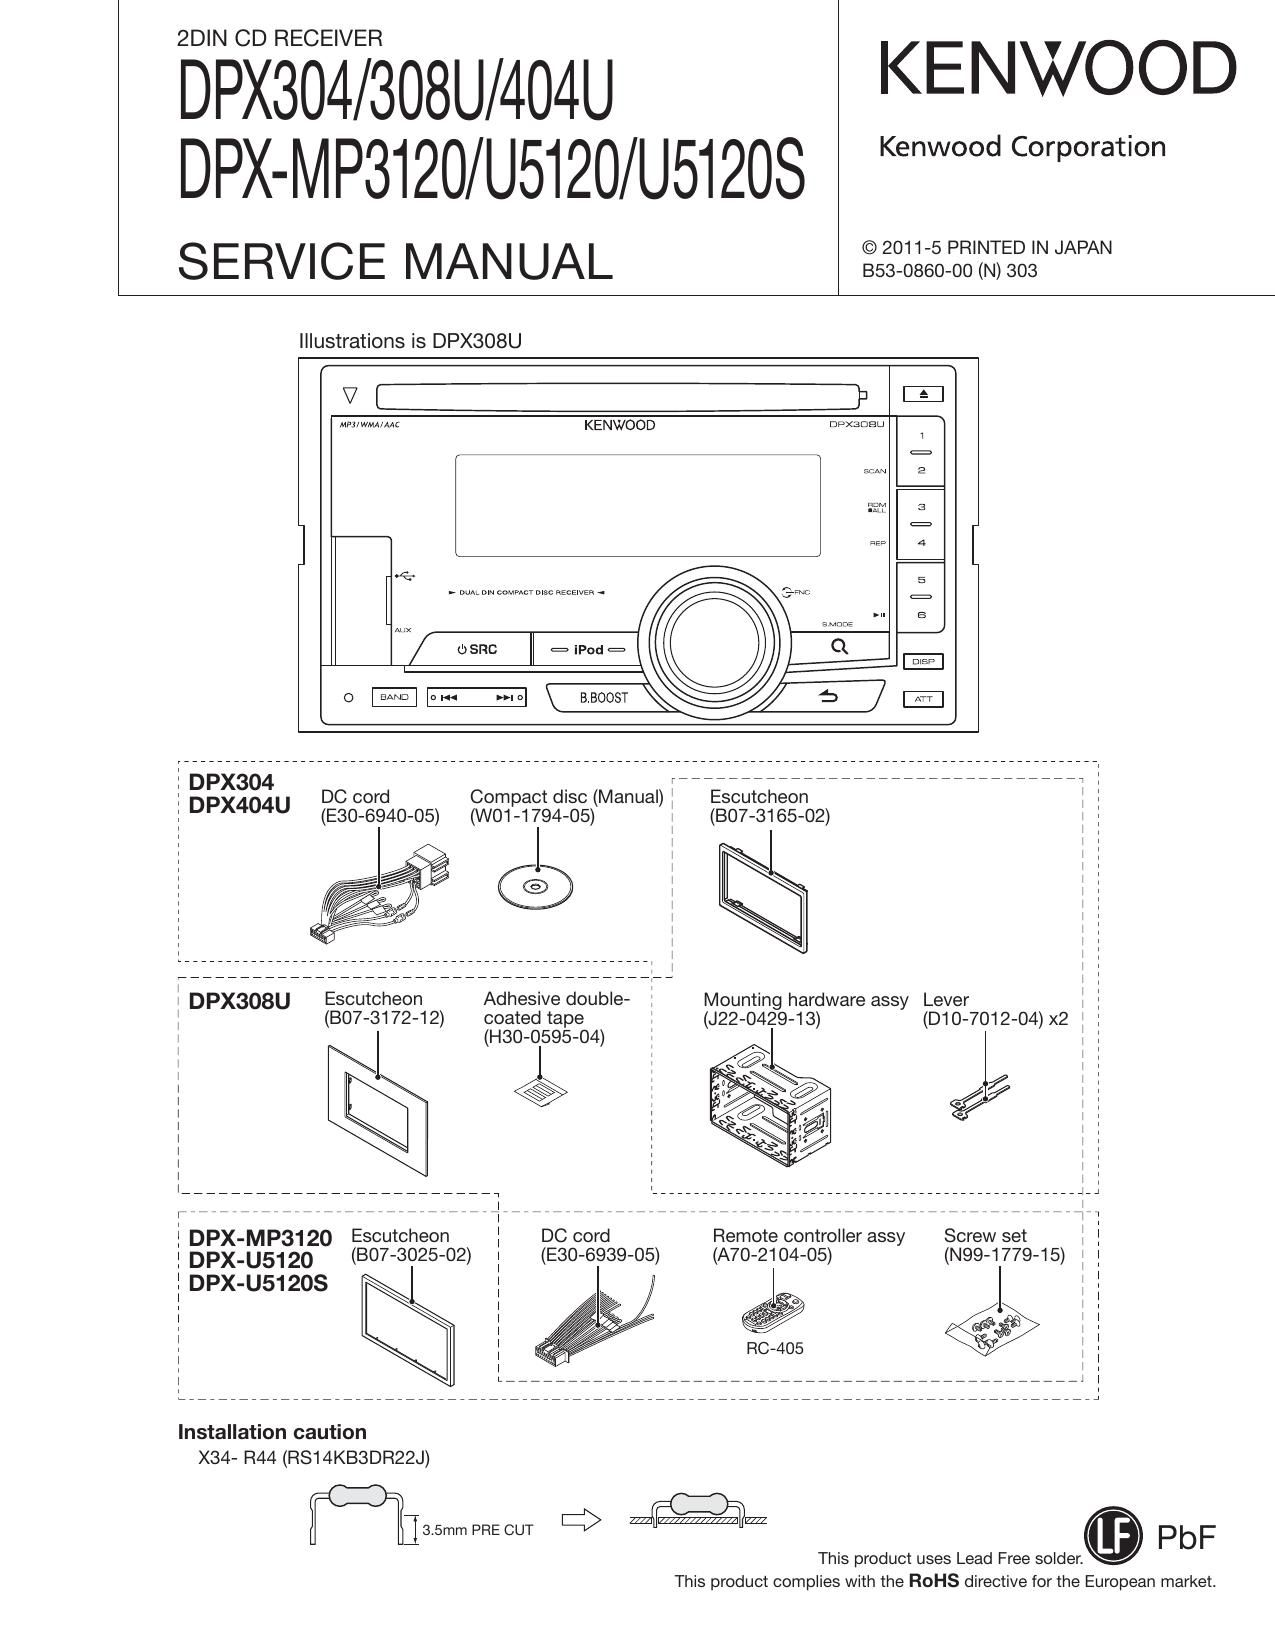 Kenwood DPX 304 Service Manual